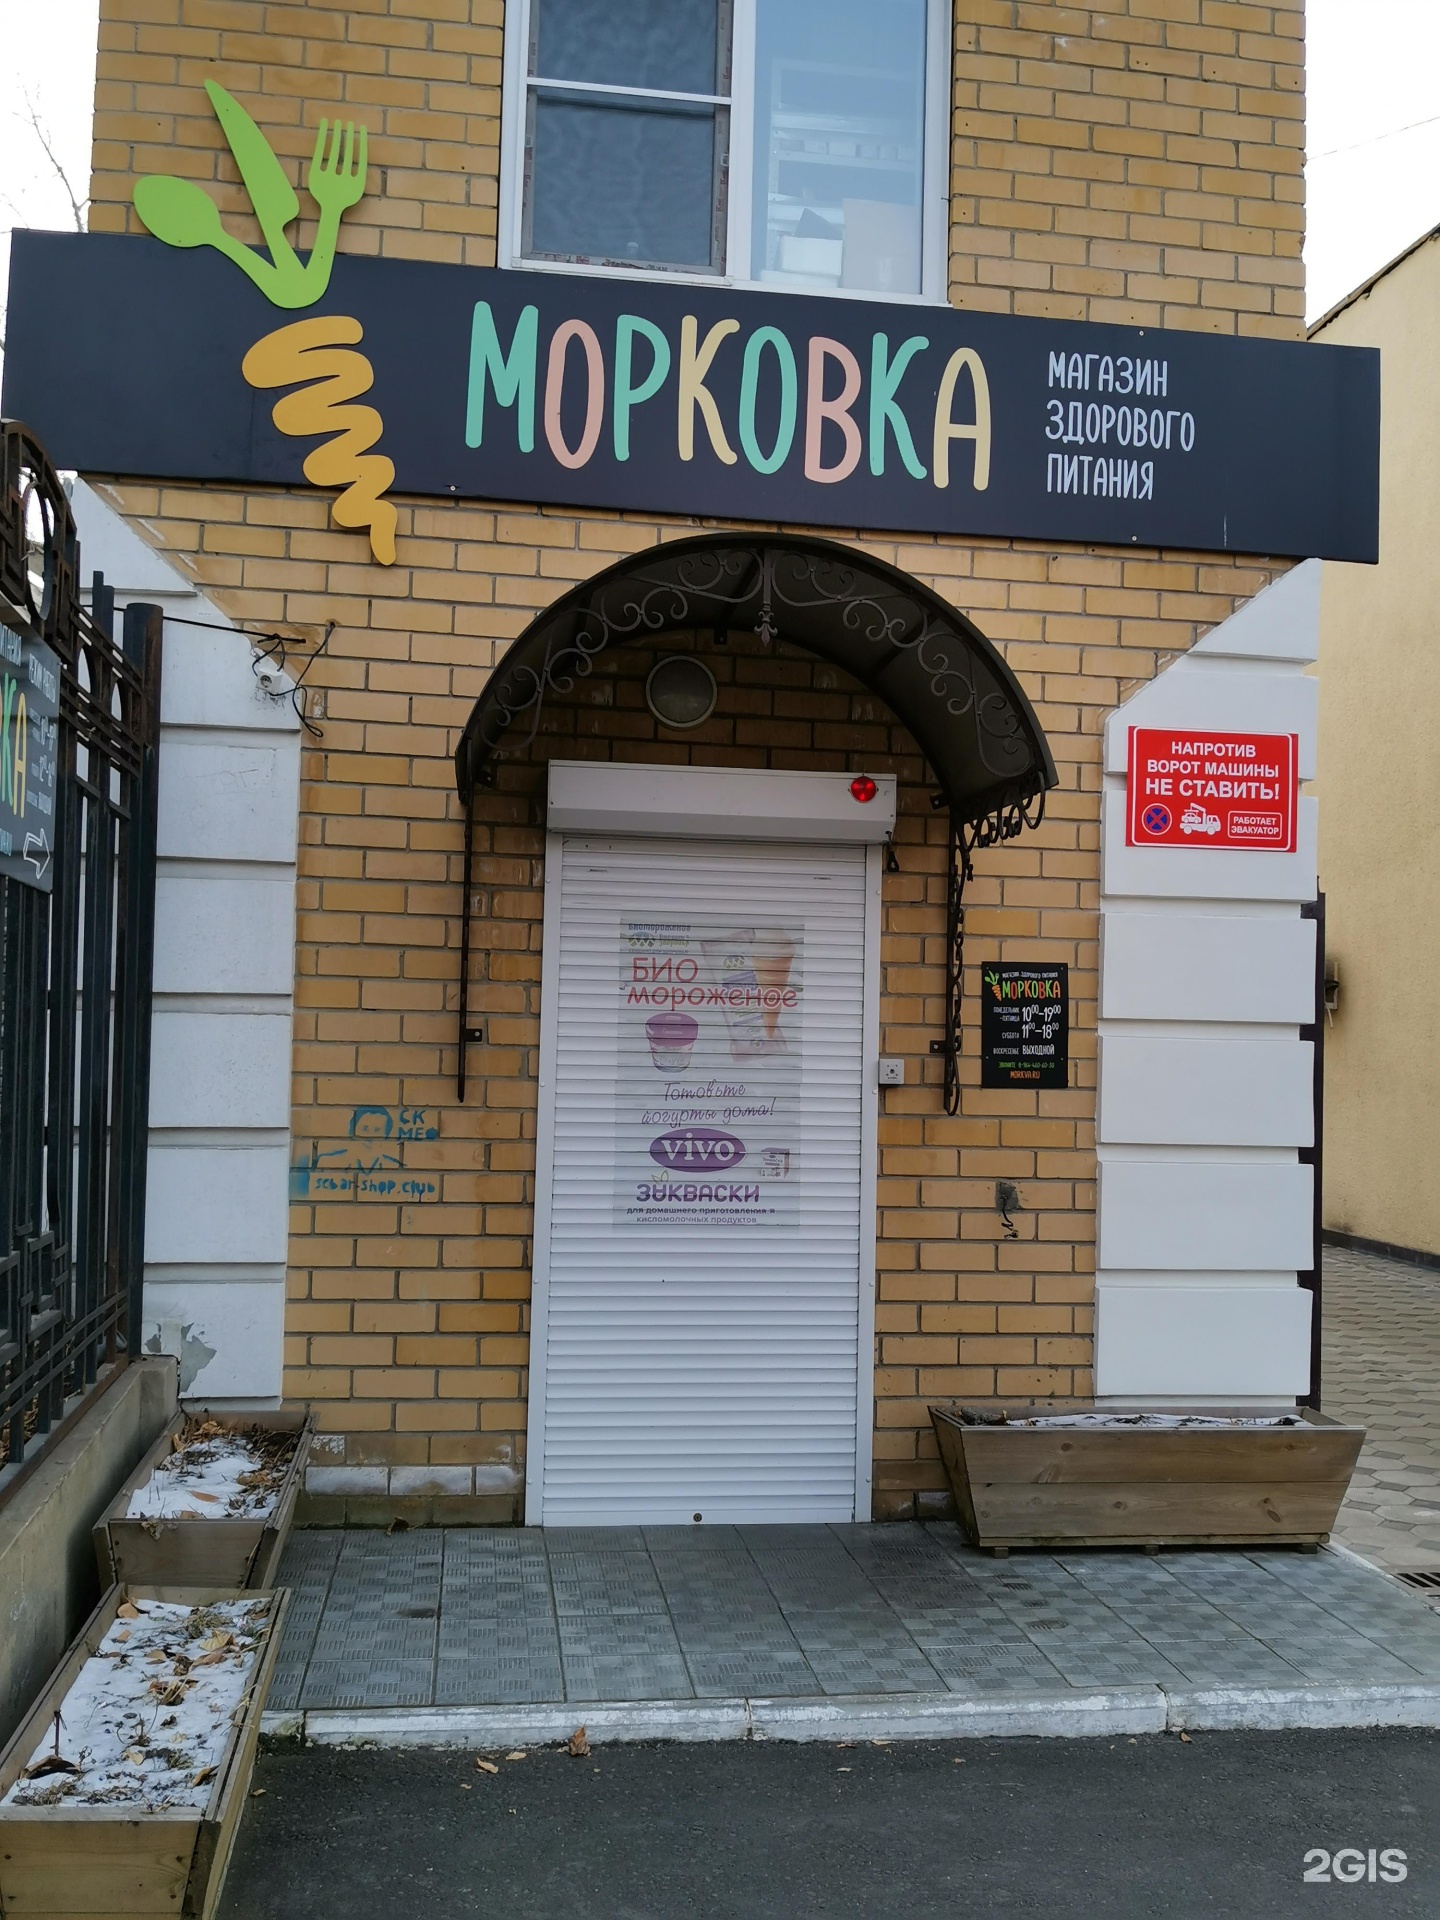 Морковка Краснодар Магазин Адреса